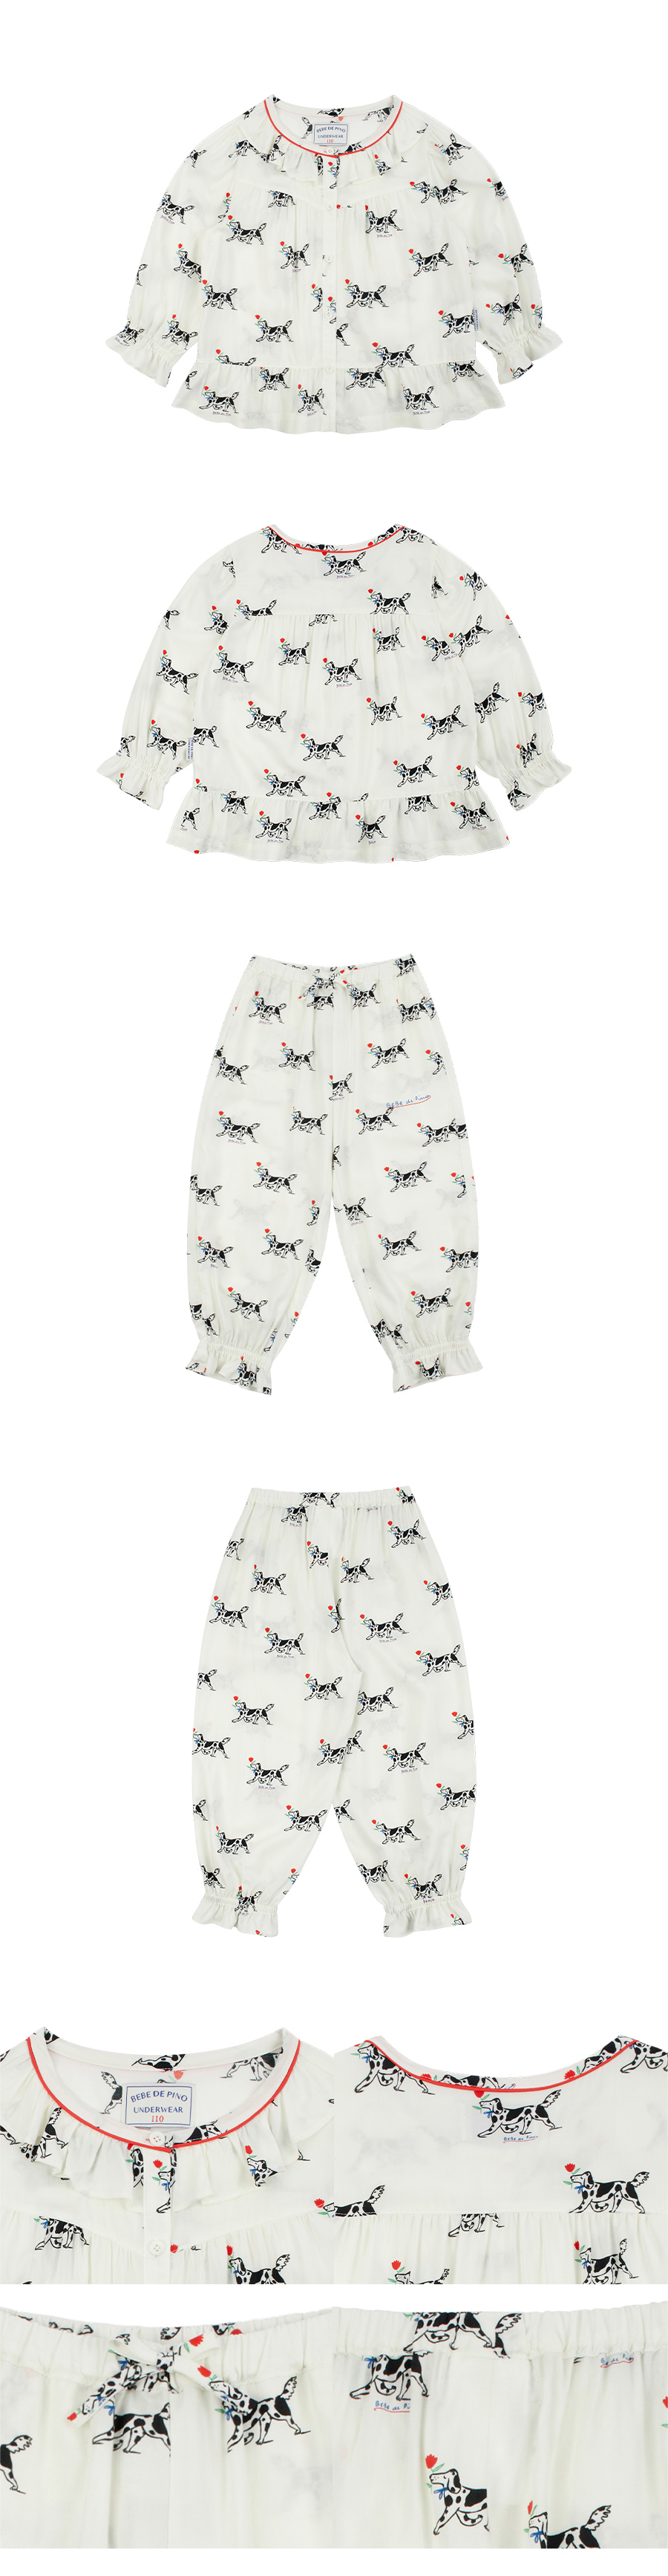 Paris dalmatian pajamas set Details